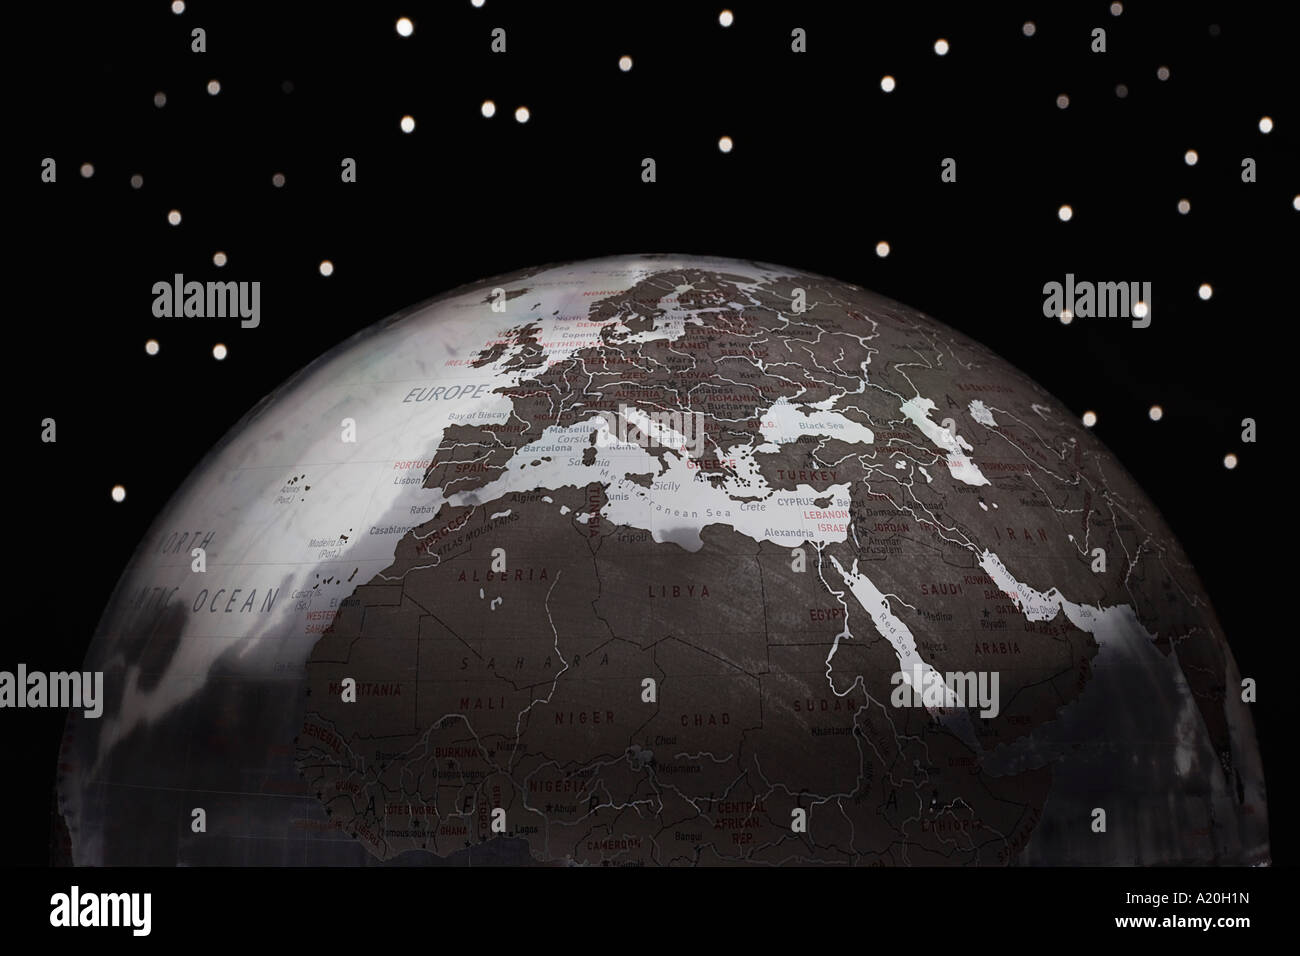 Globus gegen Sternenhimmel, beschnitten Stockfoto